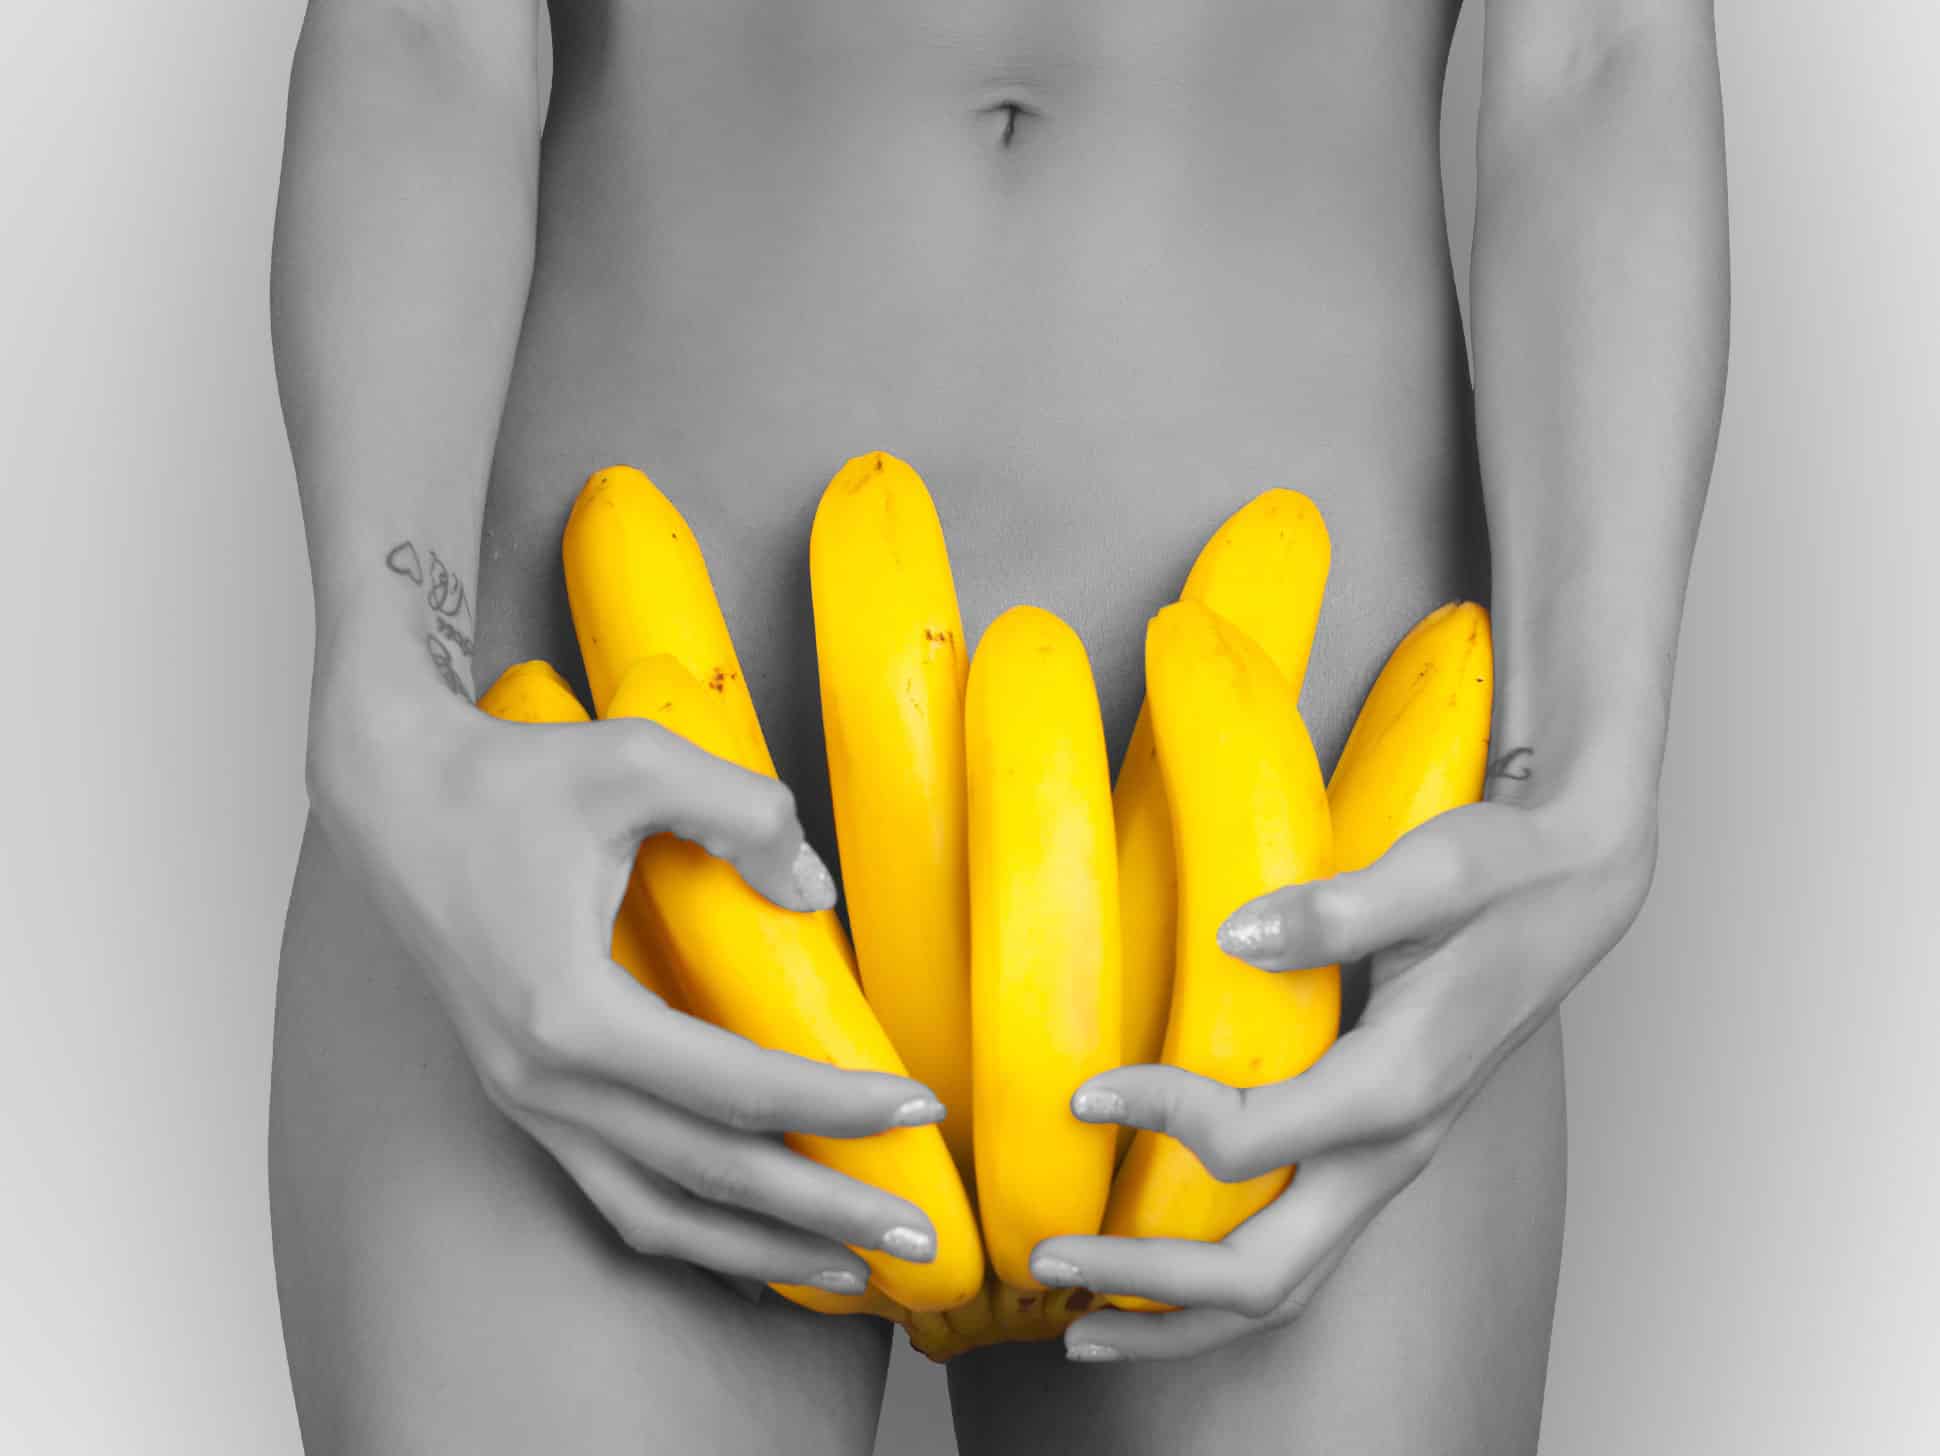 Woman poses with bananas